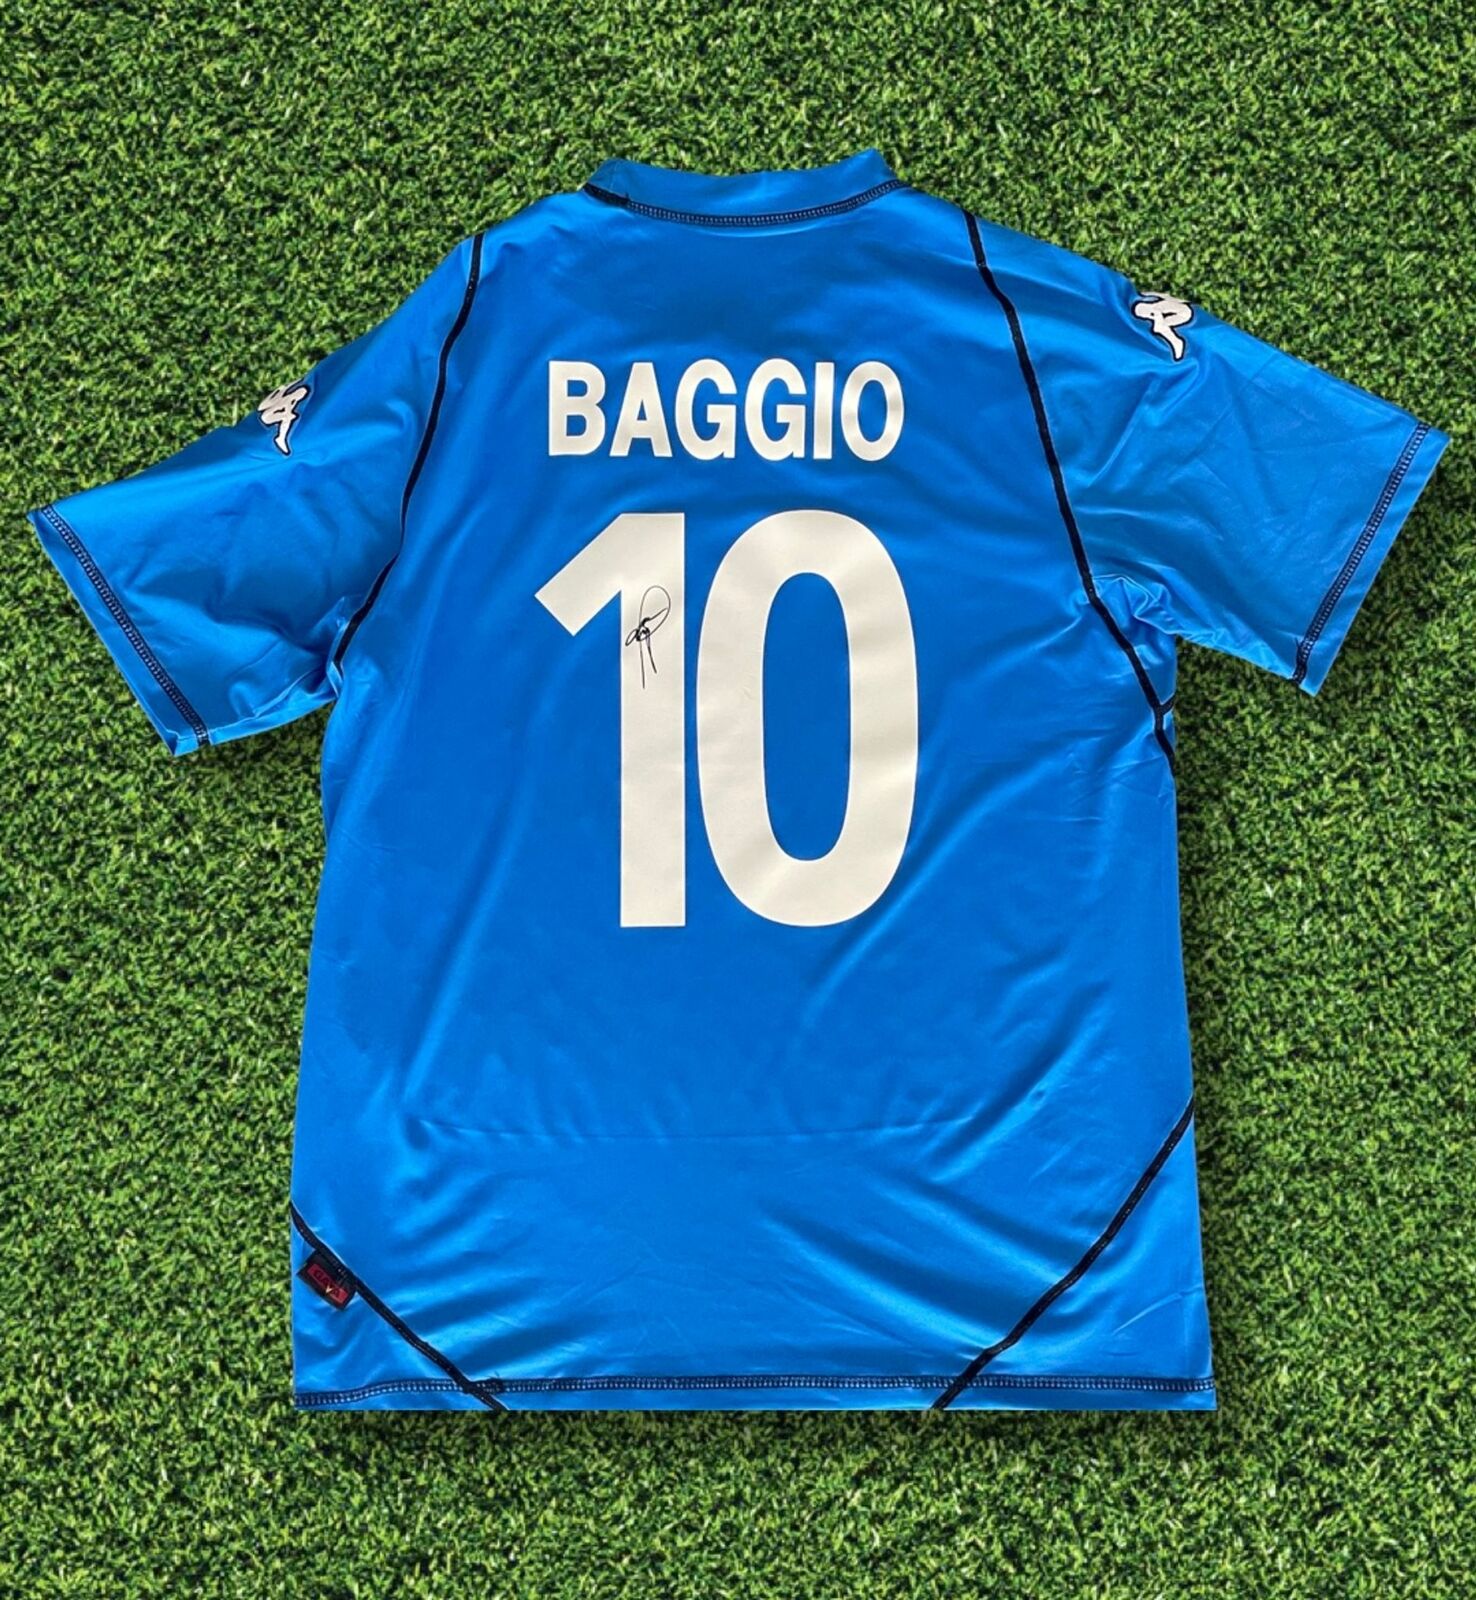 ROBERTO BAGGIO SIGNED 2003/04 RETRO BRESCIA FOOTBALL SHIRT (AFTAL COA)